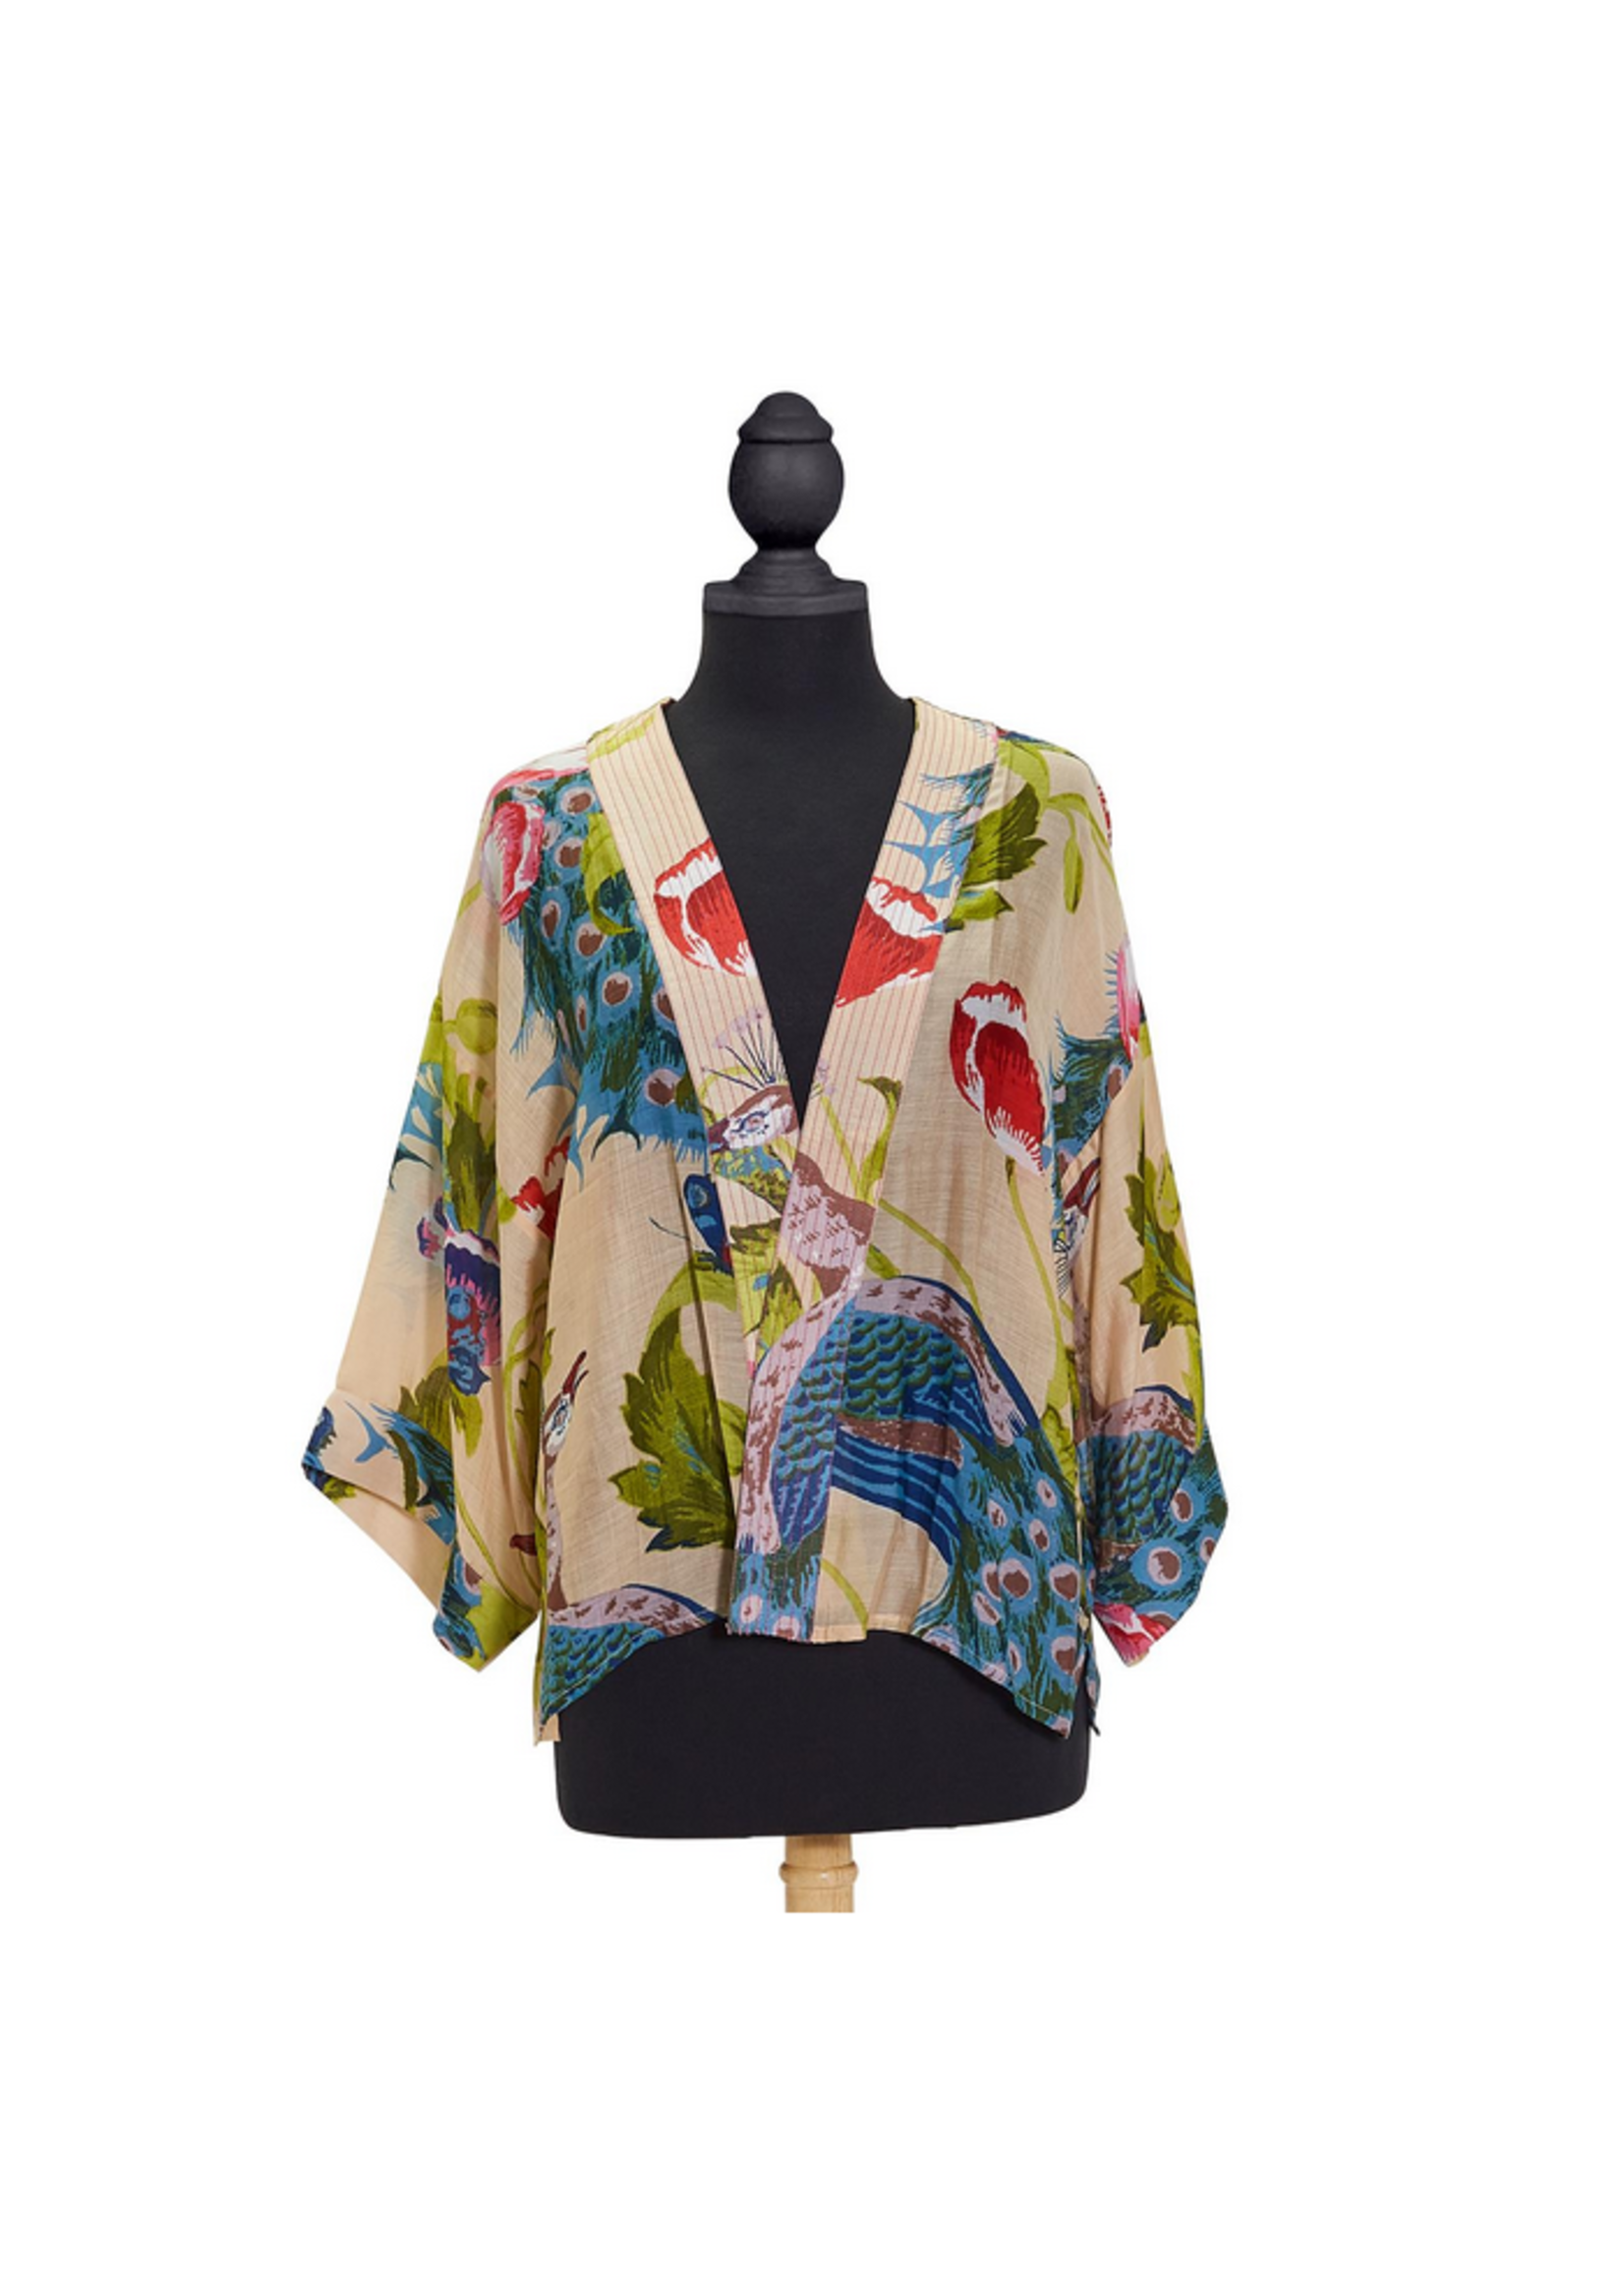 Two's Company Peacocks & Poppies Sand Short Kimono DISCONTINUED